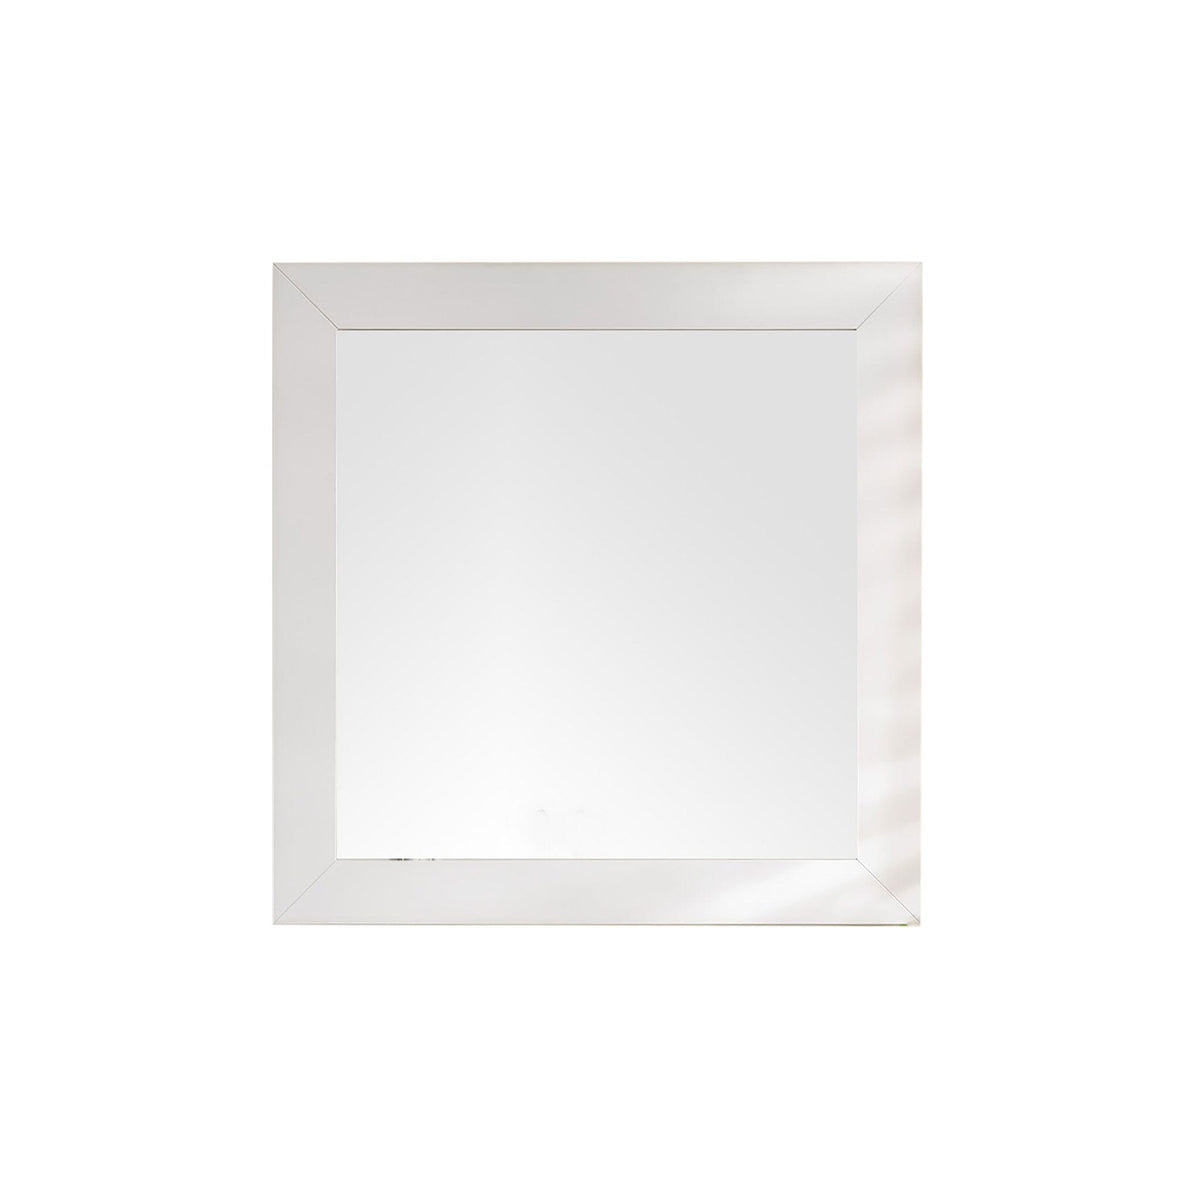 40" Weston Rectangular Mirror, Bright White